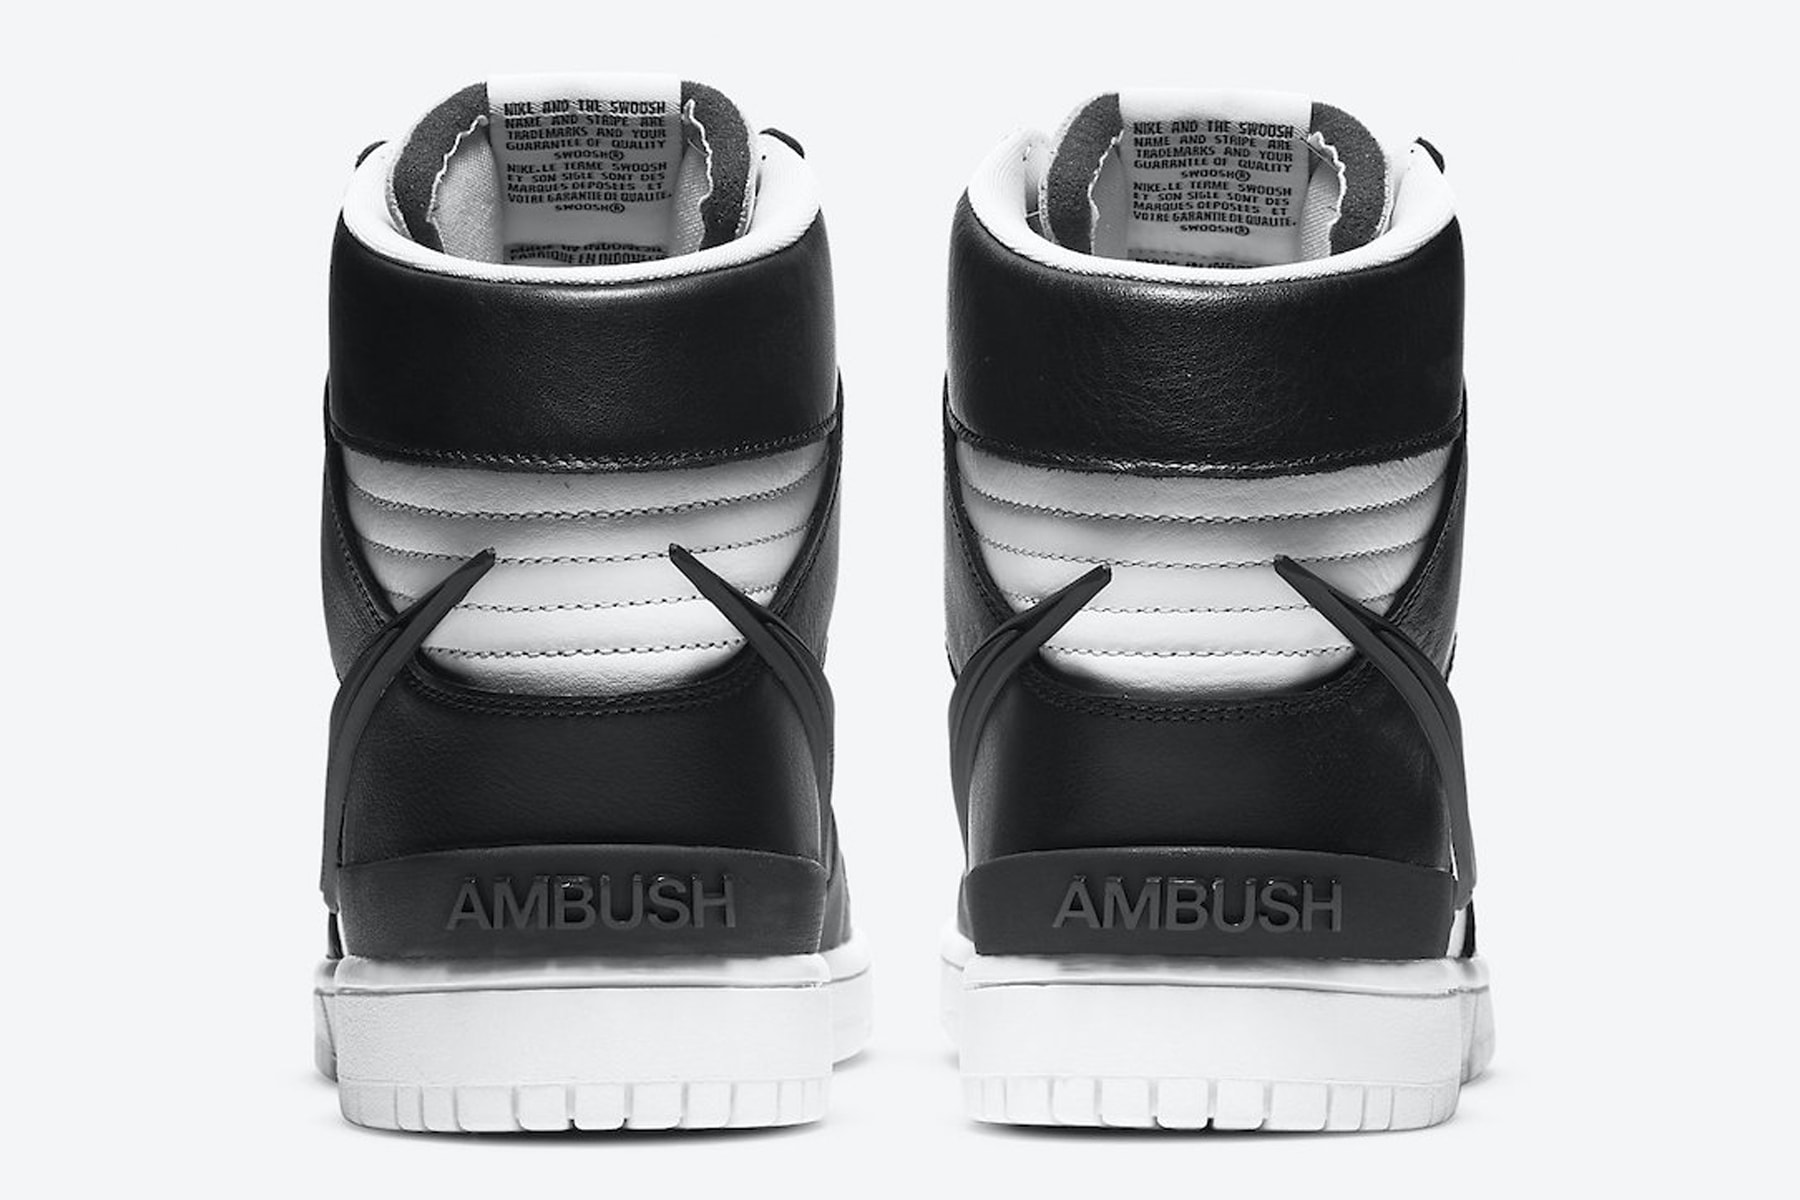 AMBUSH x Nike Dunk High 全新聯乘鞋款黑白配色官方圖輯、發售日期正式公開